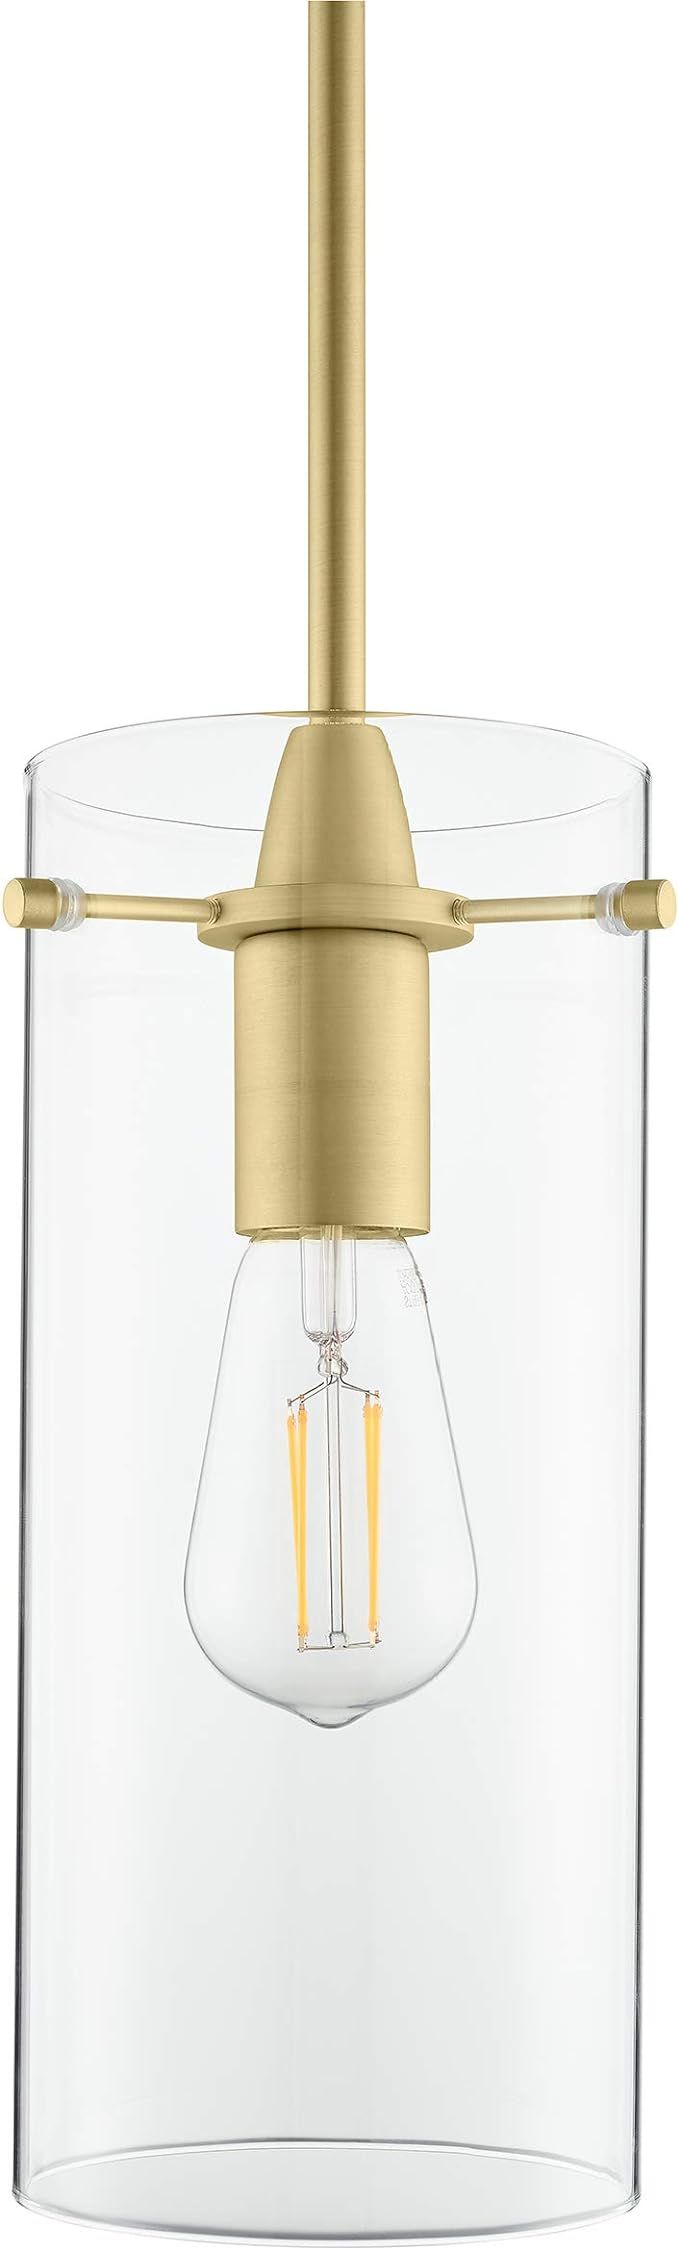 Gold Pendant Light - Modern Effimero Mini Pendant Lighting for Kitchen Island Decor - Clear Glass... | Amazon (US)